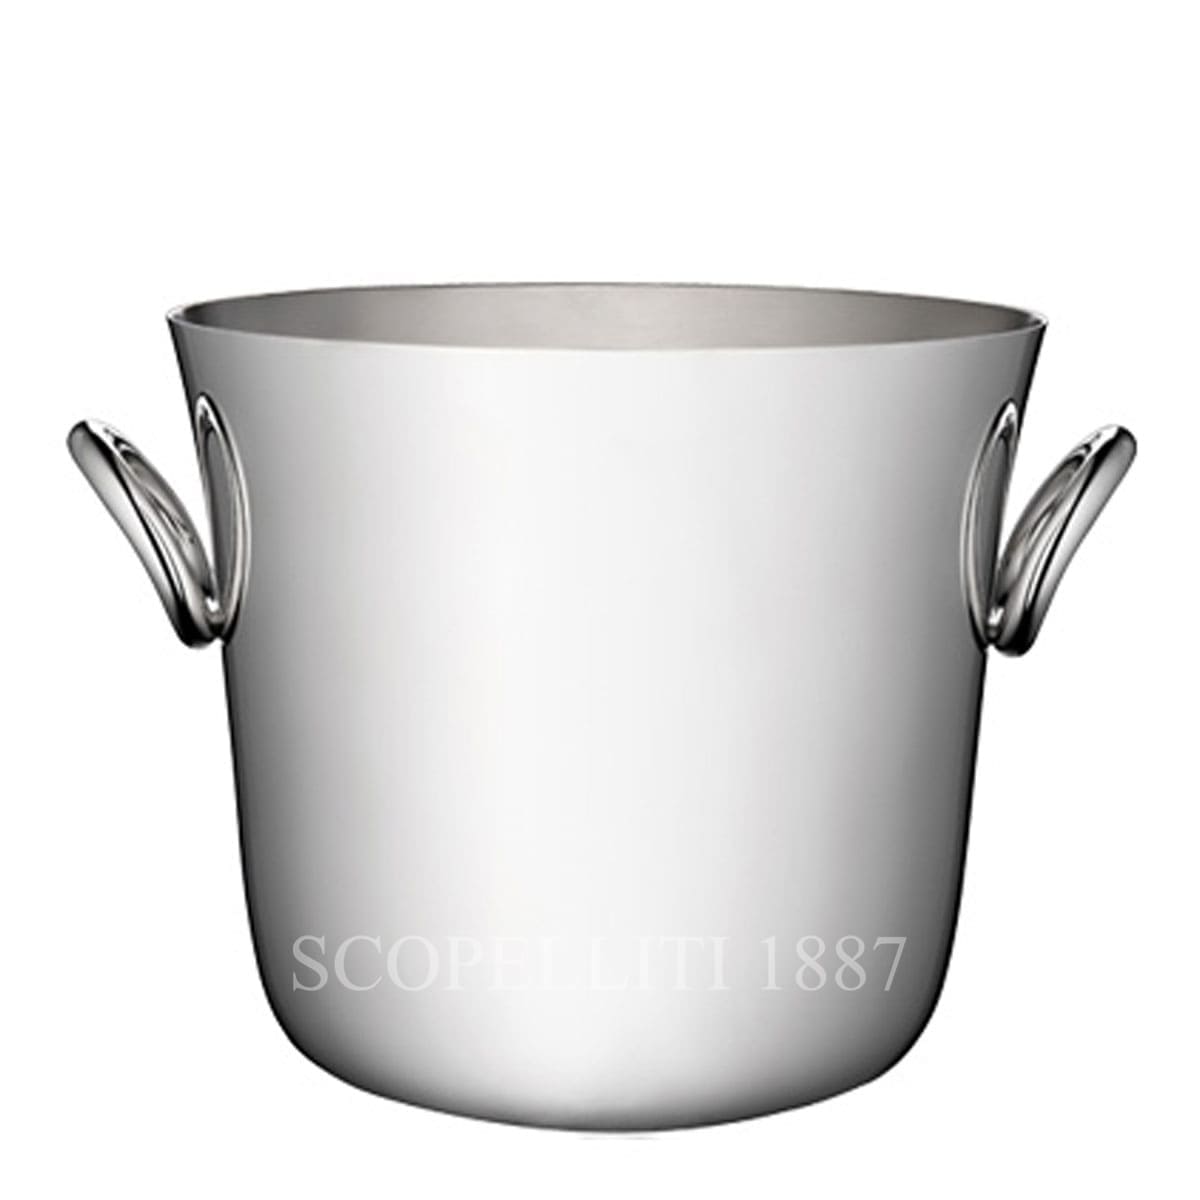 Christofle Vertigo Silver Plated Ice Bucket